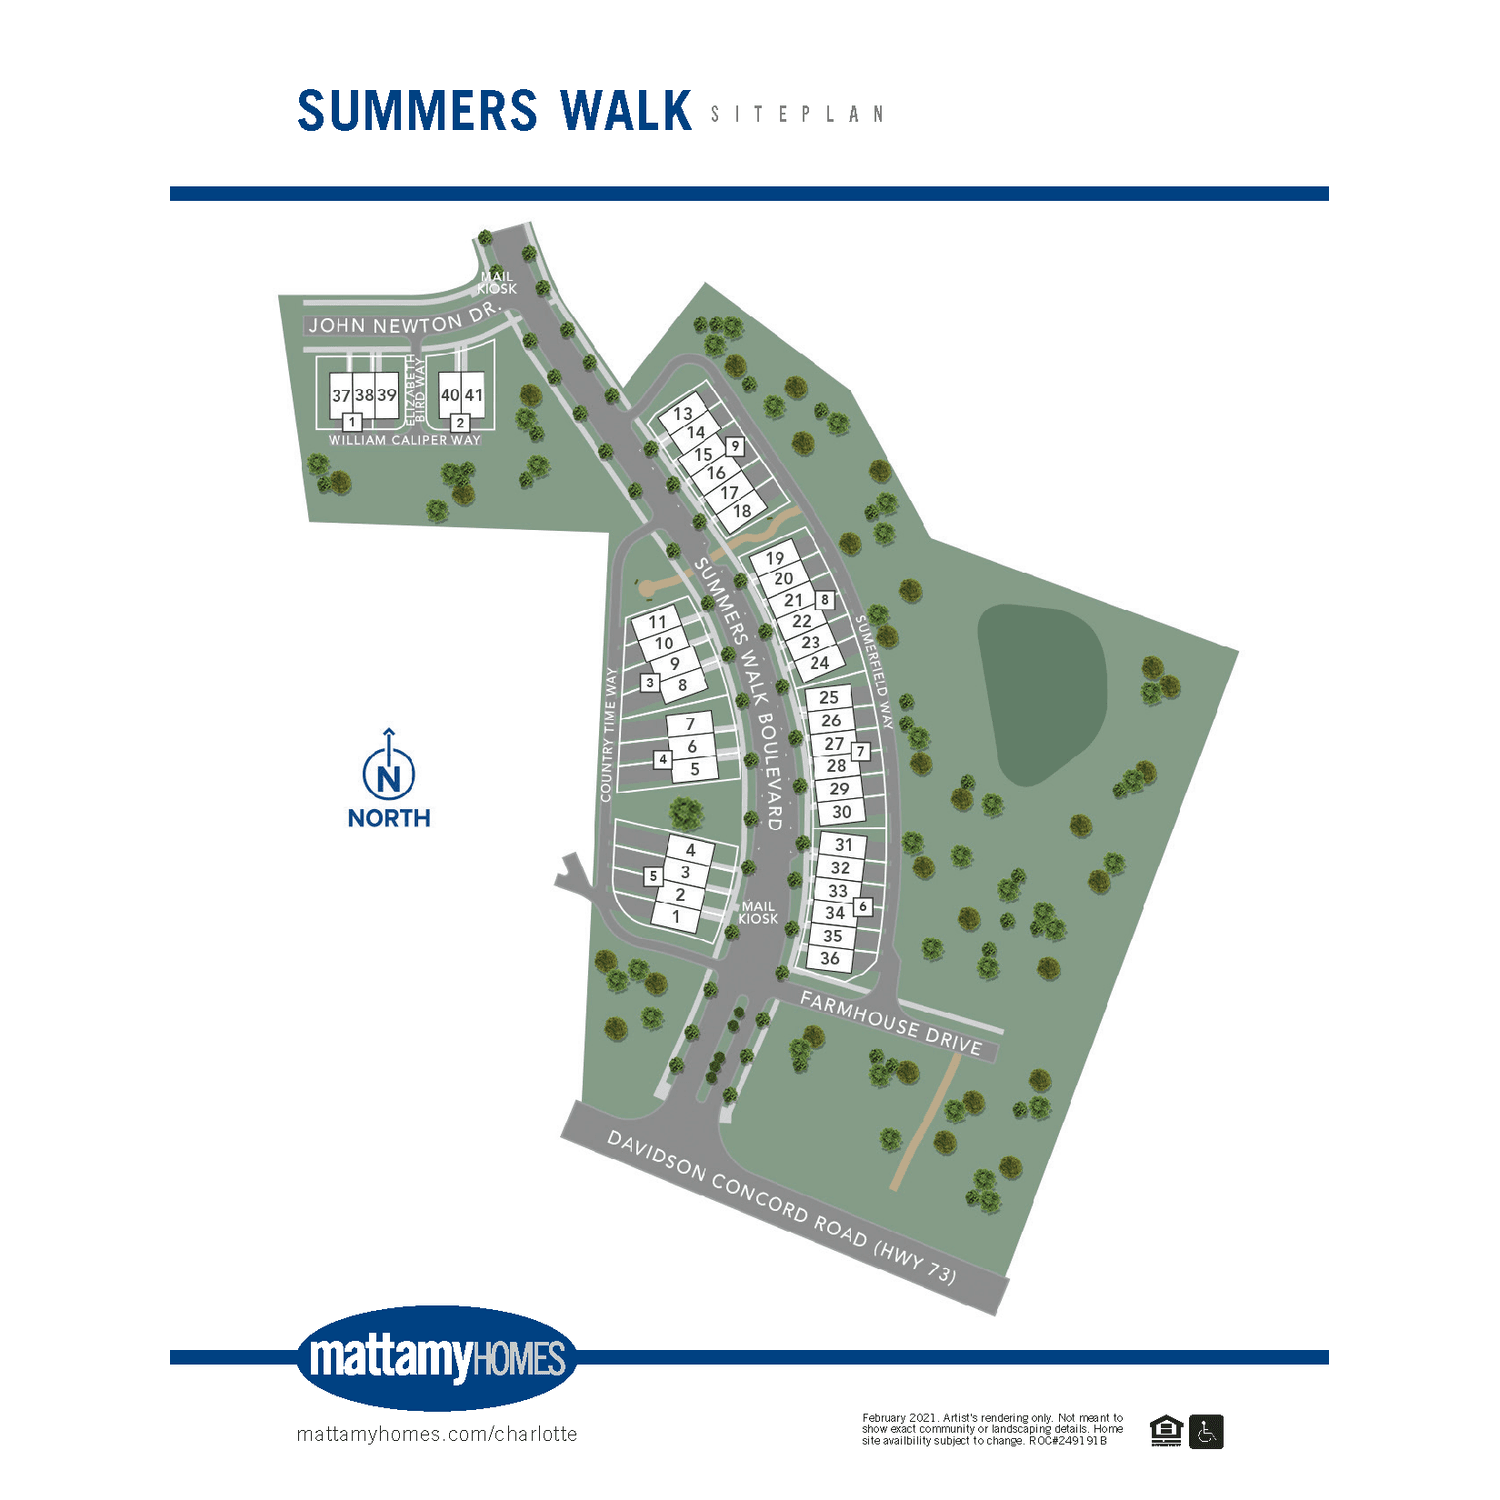 Summers Walk建於 16014 Davidson-Concord Road, Davidson, NC 28036